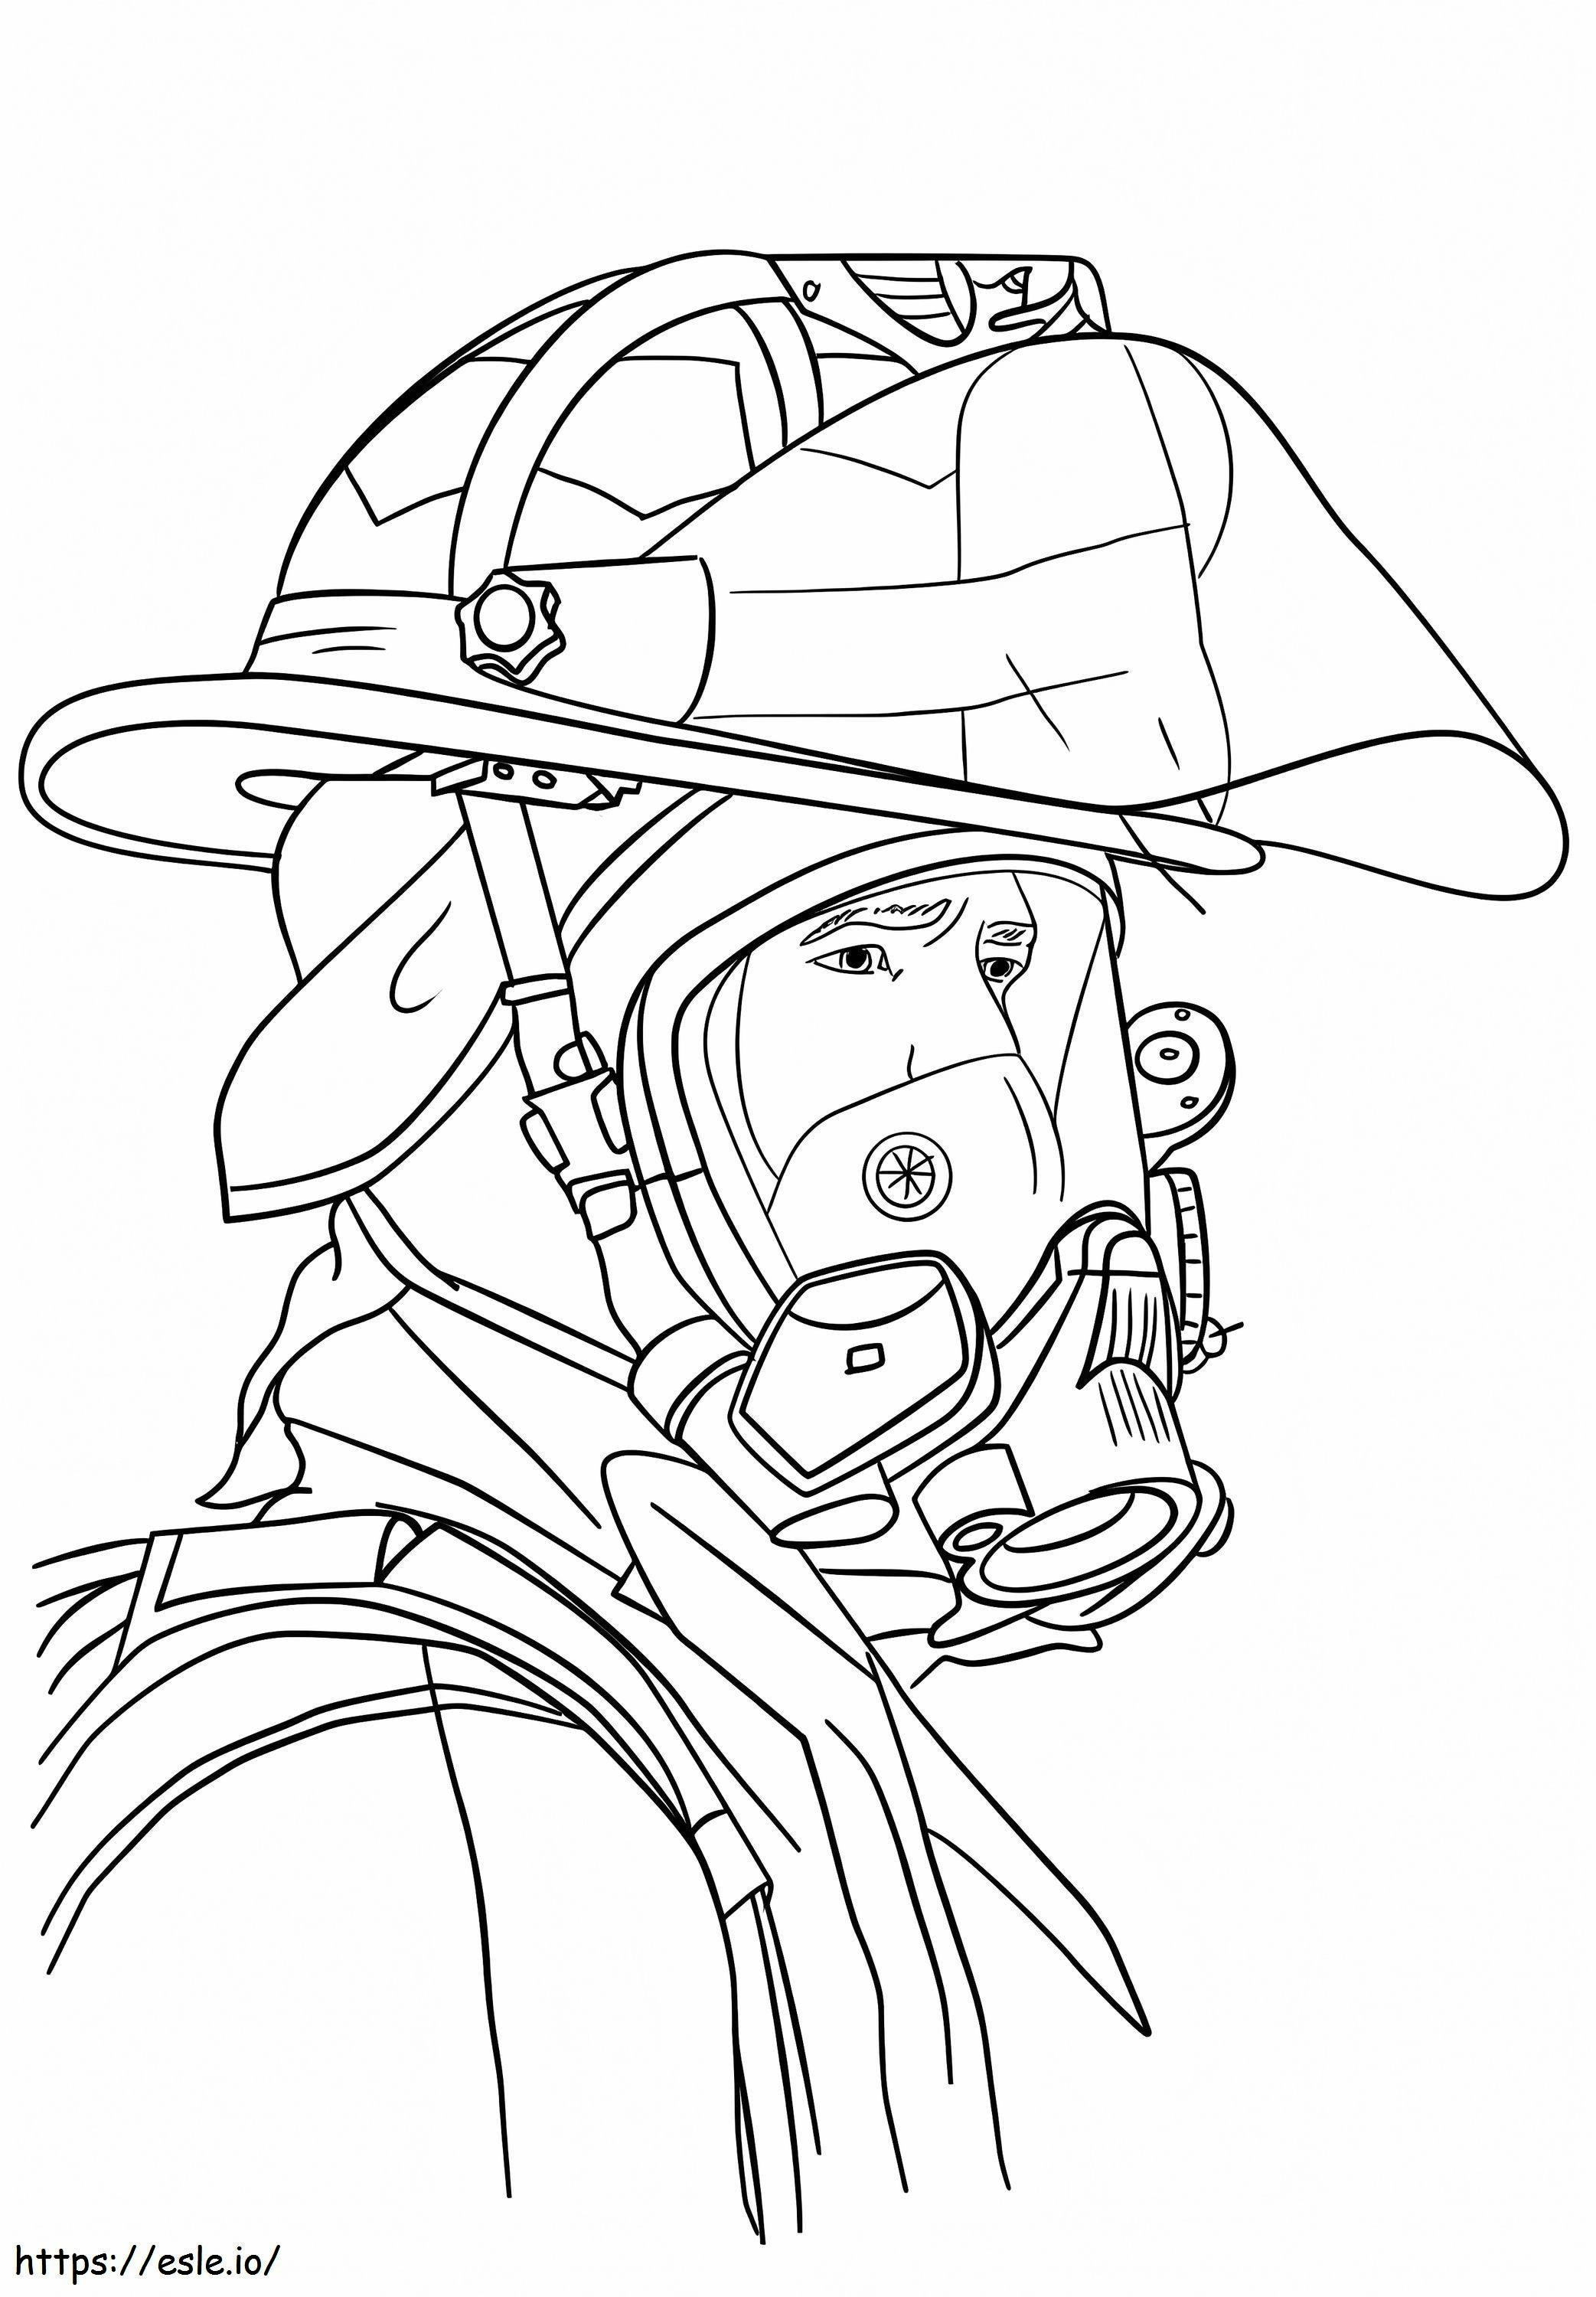 Brandweerman portret kleurplaat kleurplaat